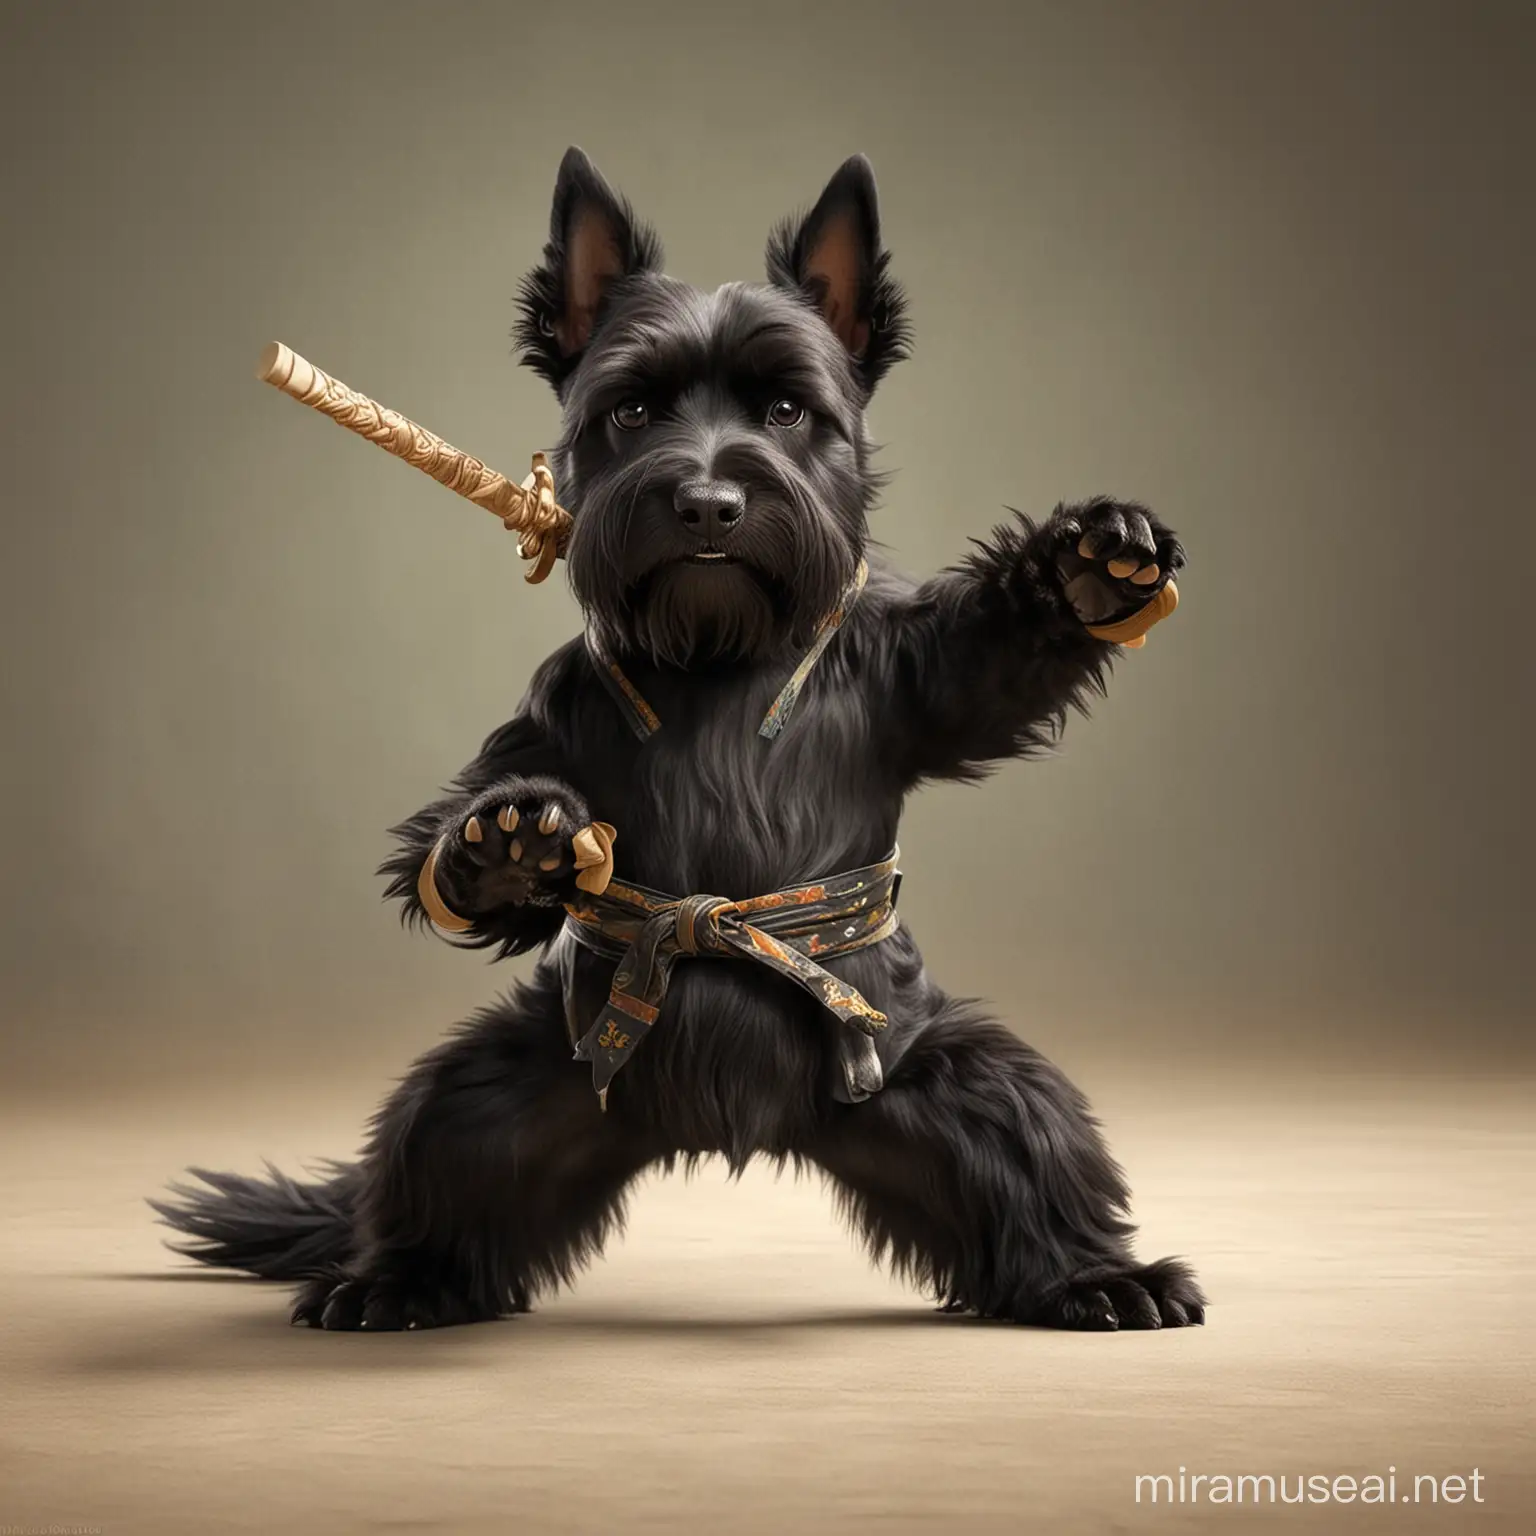 Kung Fu Panda Style Scottish Terrier Playful Black Dog in Martial Arts Pose